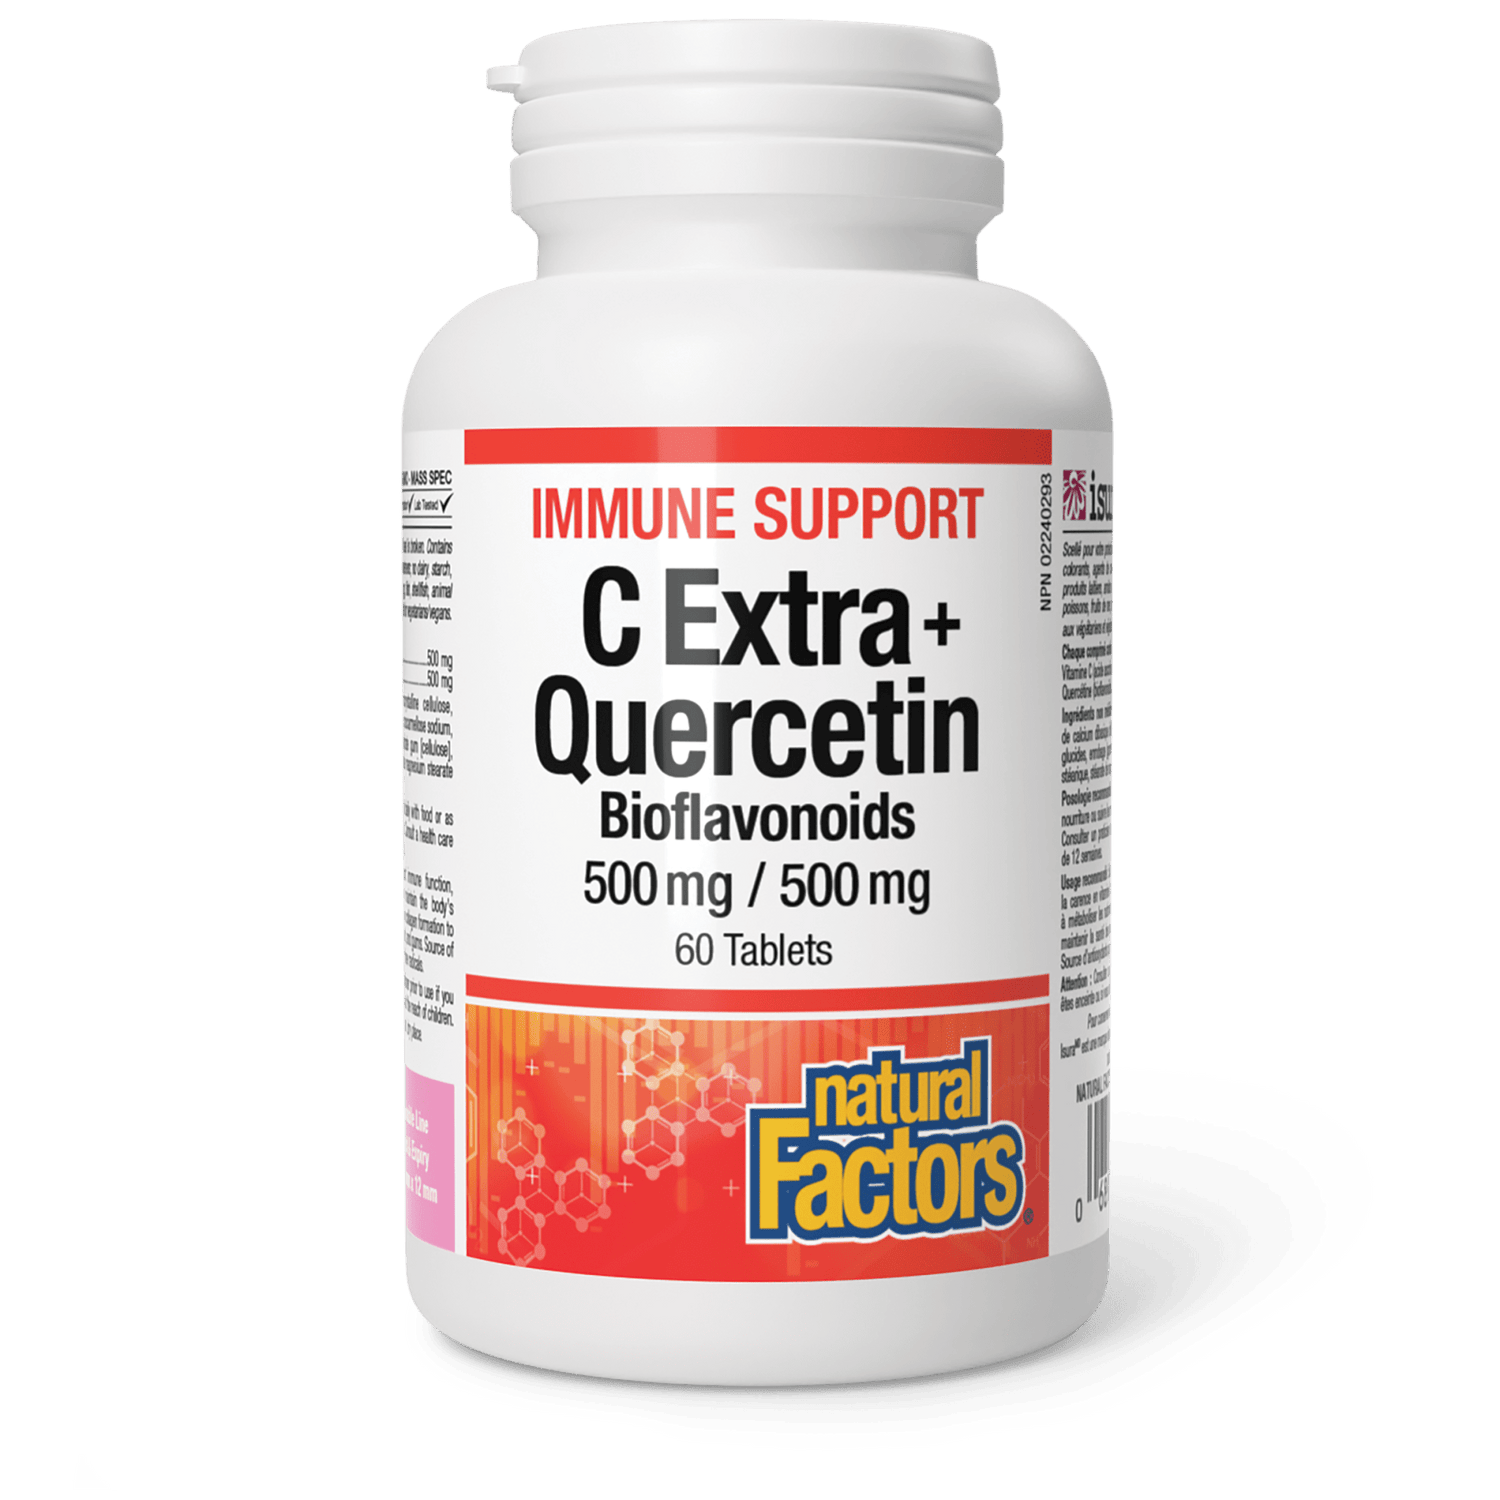 C Extra + Quercetin Bioflavonoids 500 mg/500 mg, Natural Factors|v|image|1333